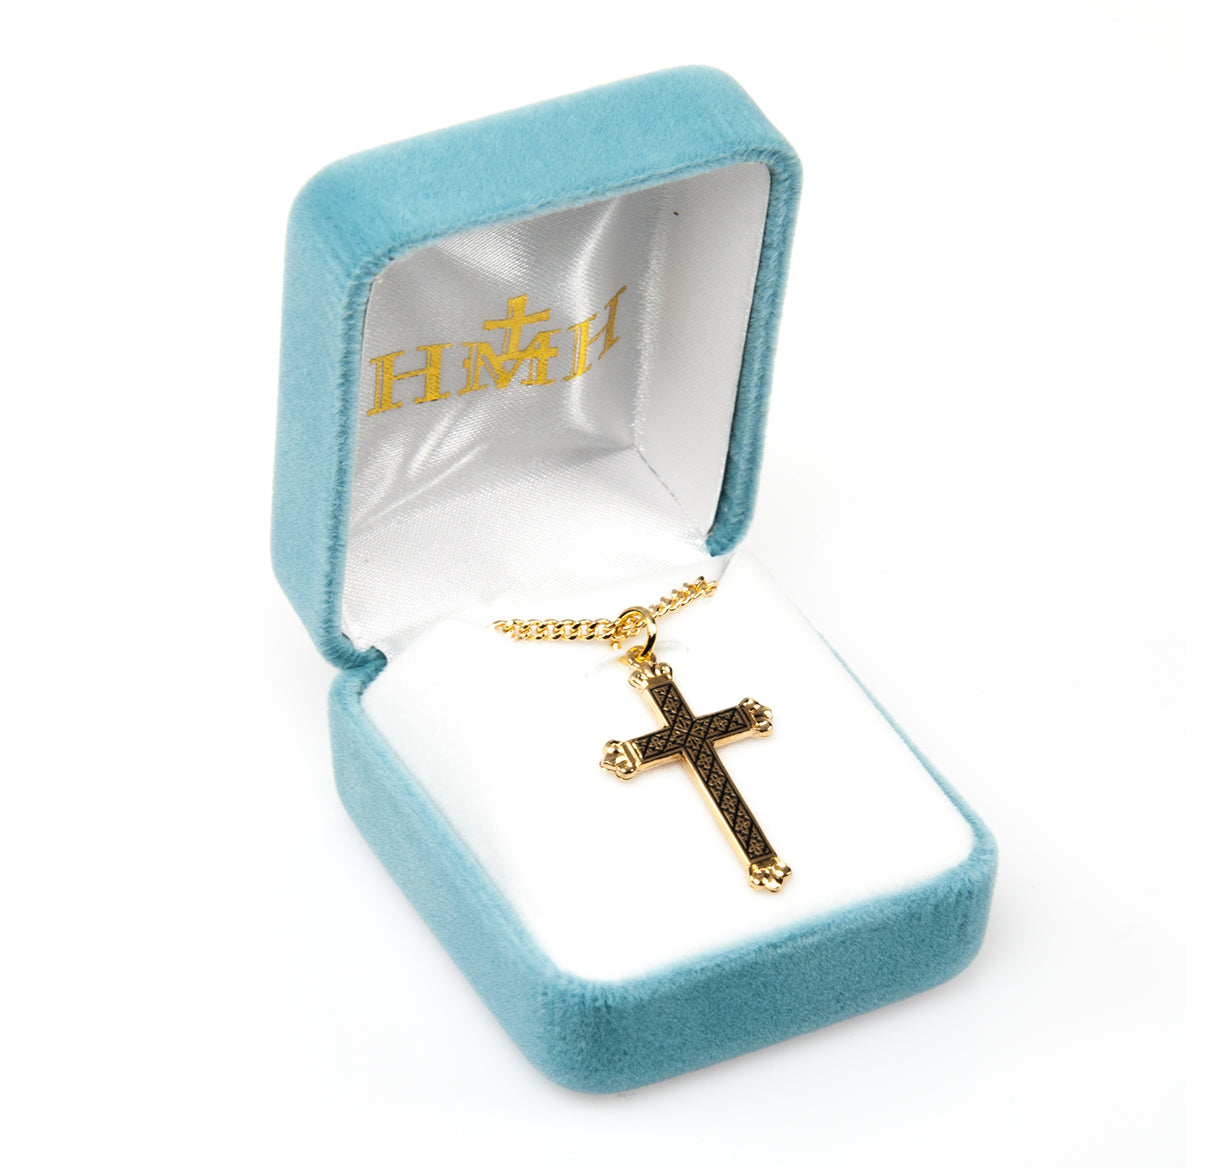 Gold Cross Necklace with Black Enamel Design (1.2" Metal)